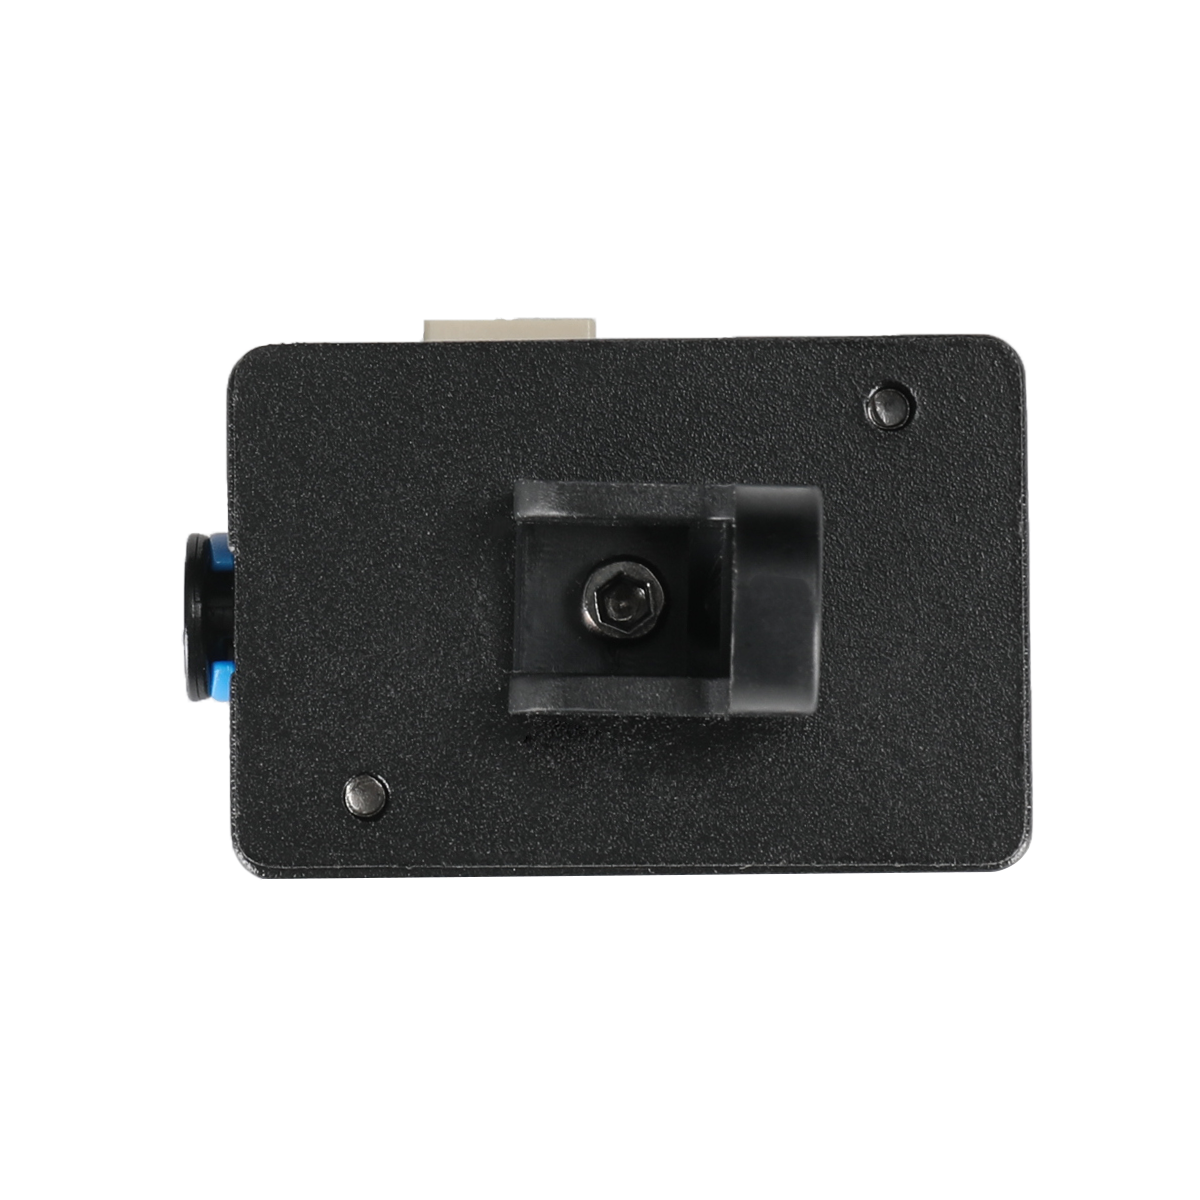 Sovol Filament Runout Sensor Kit for SV08